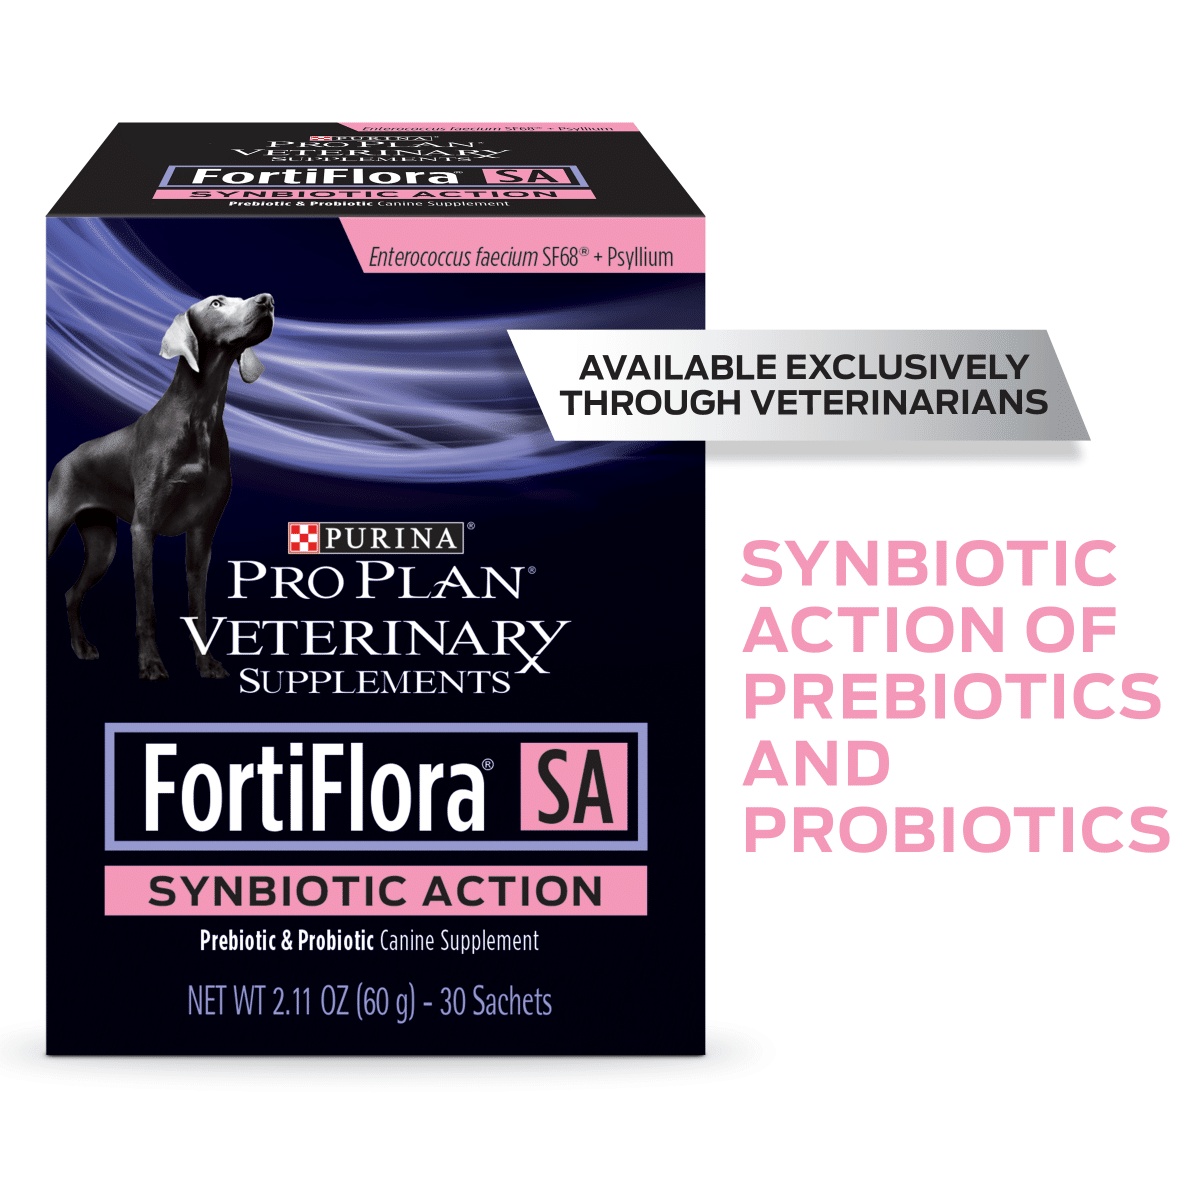 Purina-Pro-Plan-Veterinary-Supplements-FortiFlora-SA-Synbiotic-Action-Dog.jpg